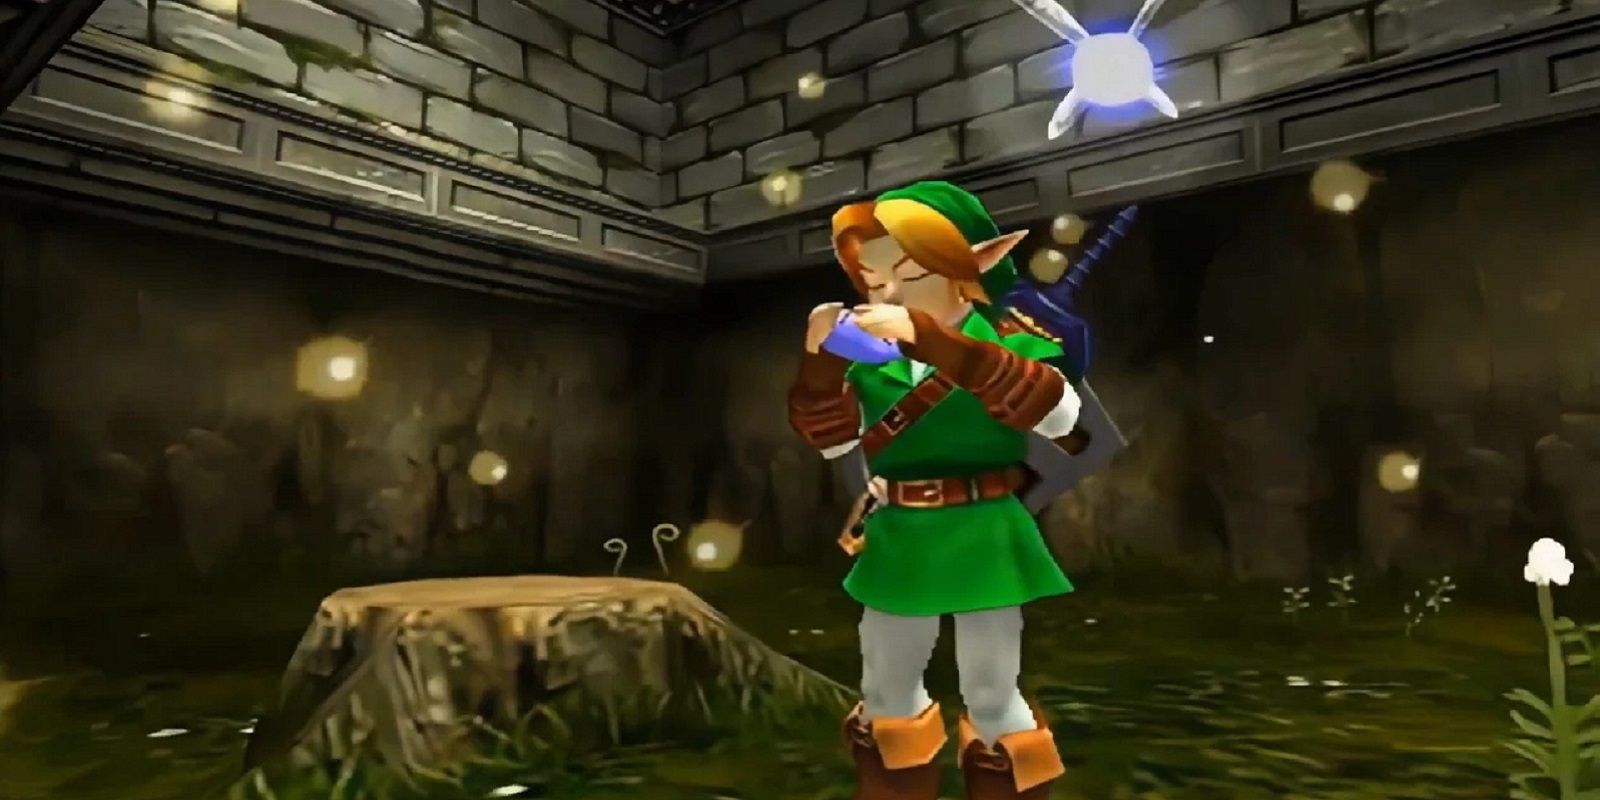 Zelda Ocarina Of Time, Original vs Remake